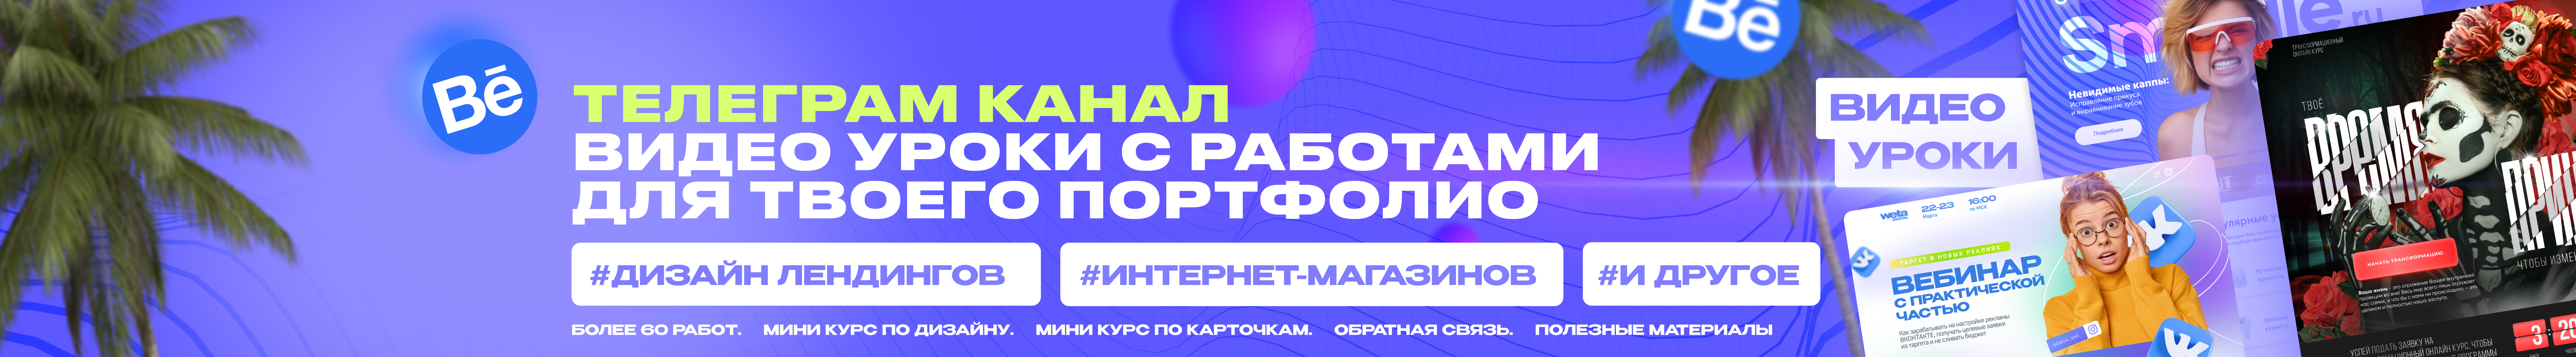 Bannière de profil de Vladislav Kovalchuk